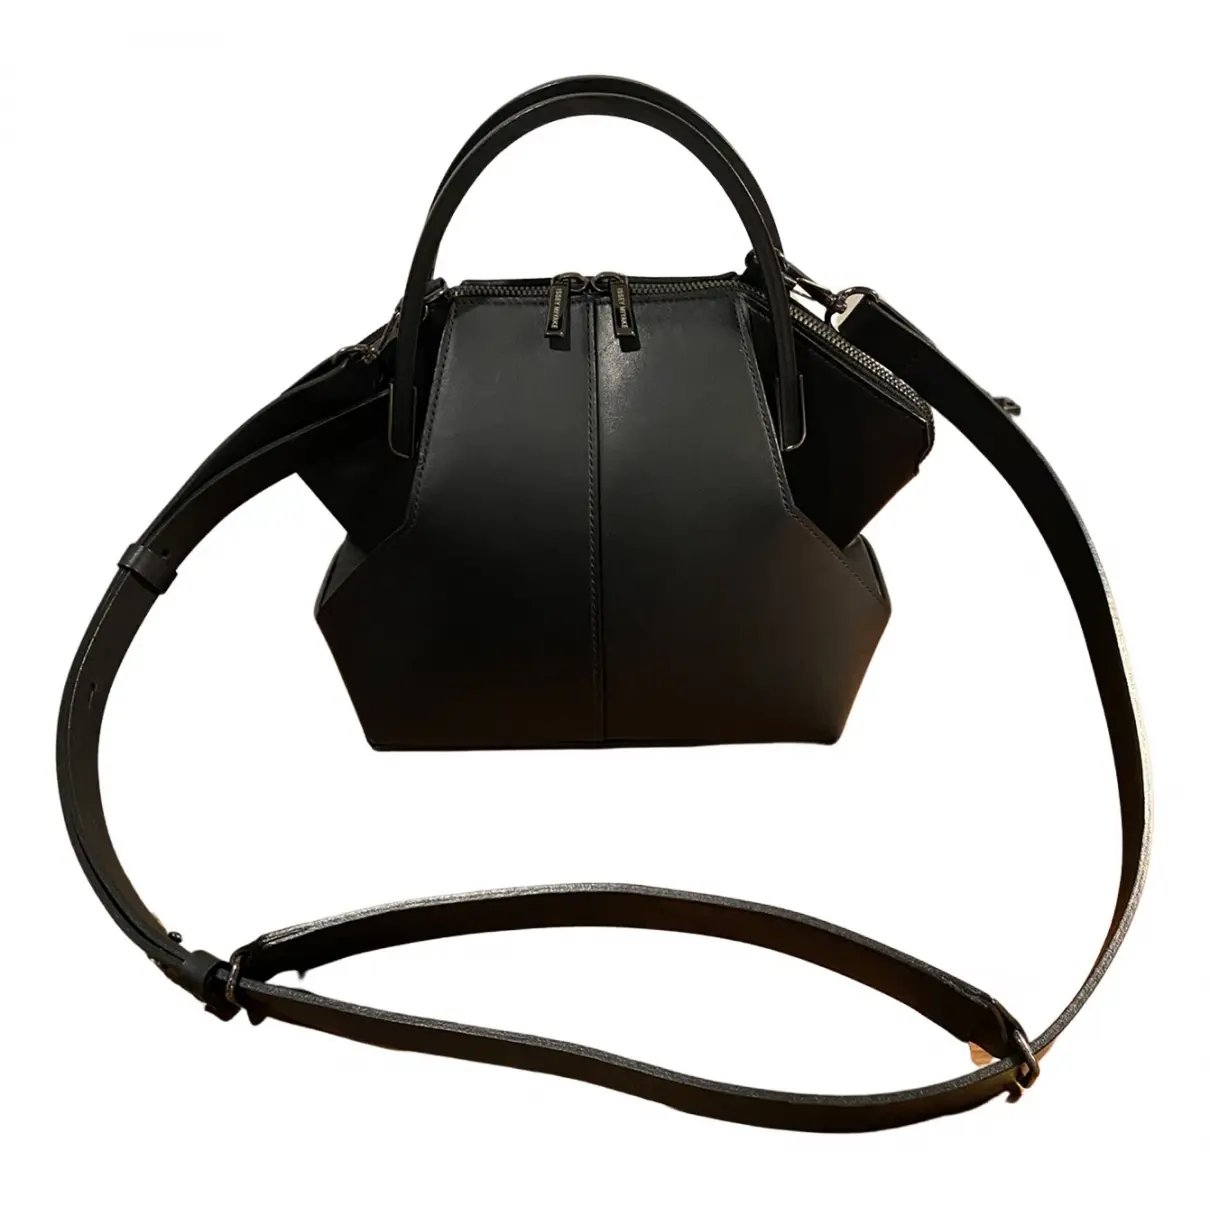 Leather handbag Issey Miyake